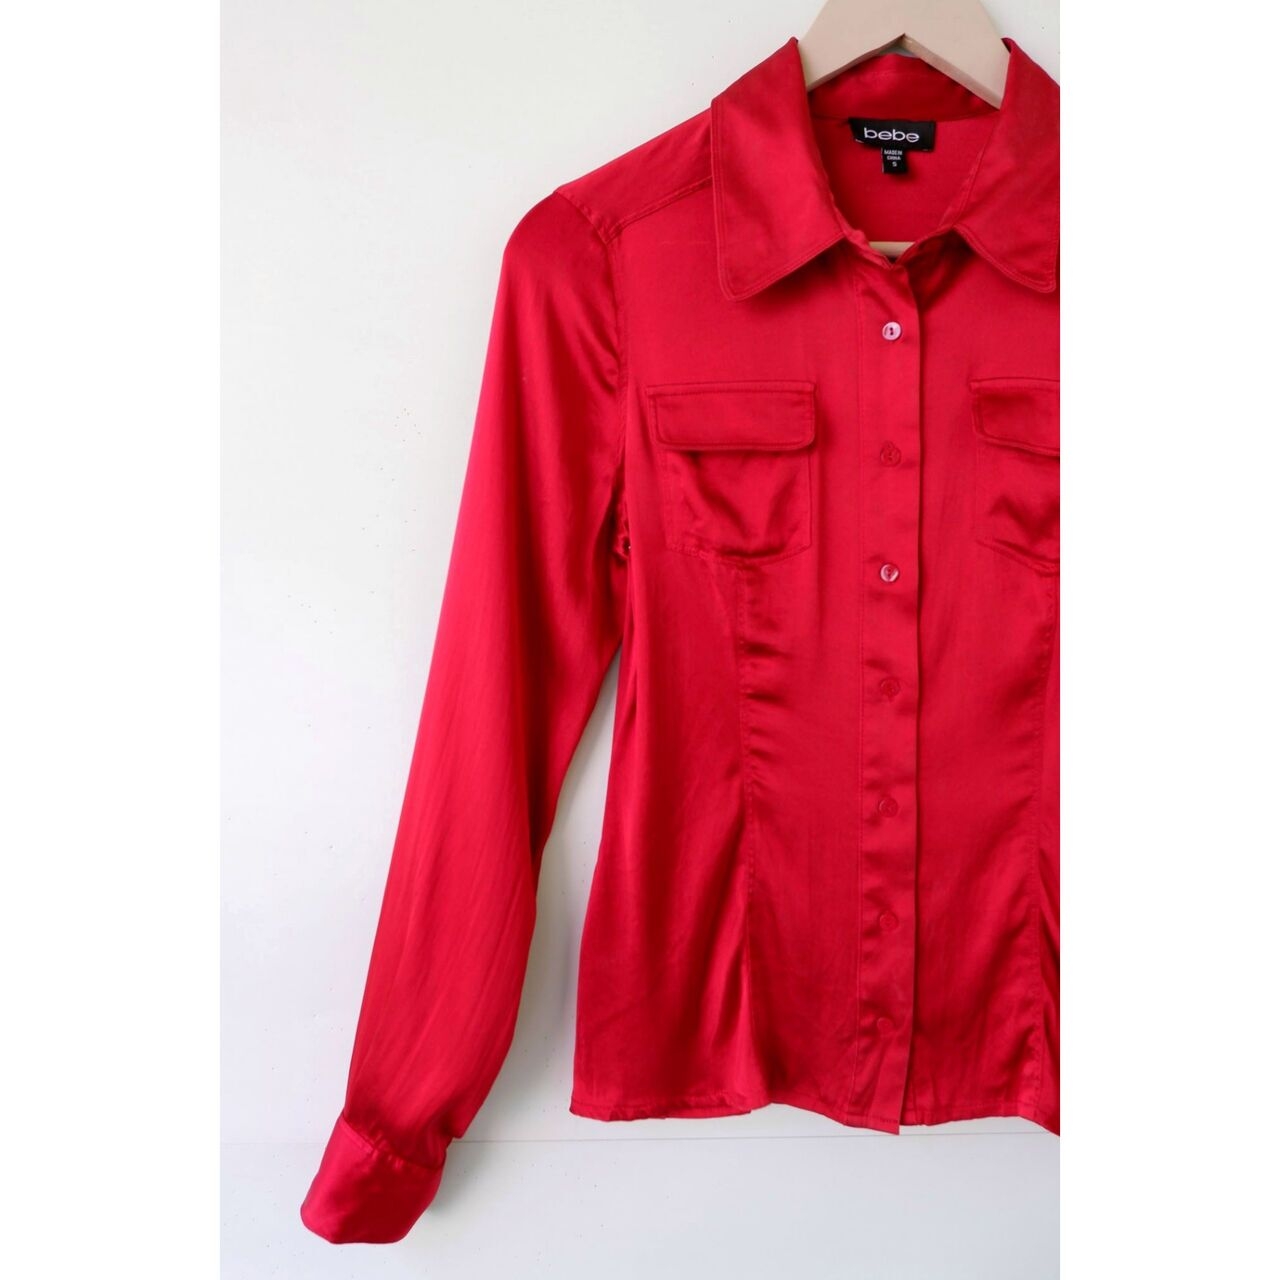 Bebe Venetian Red Shirt